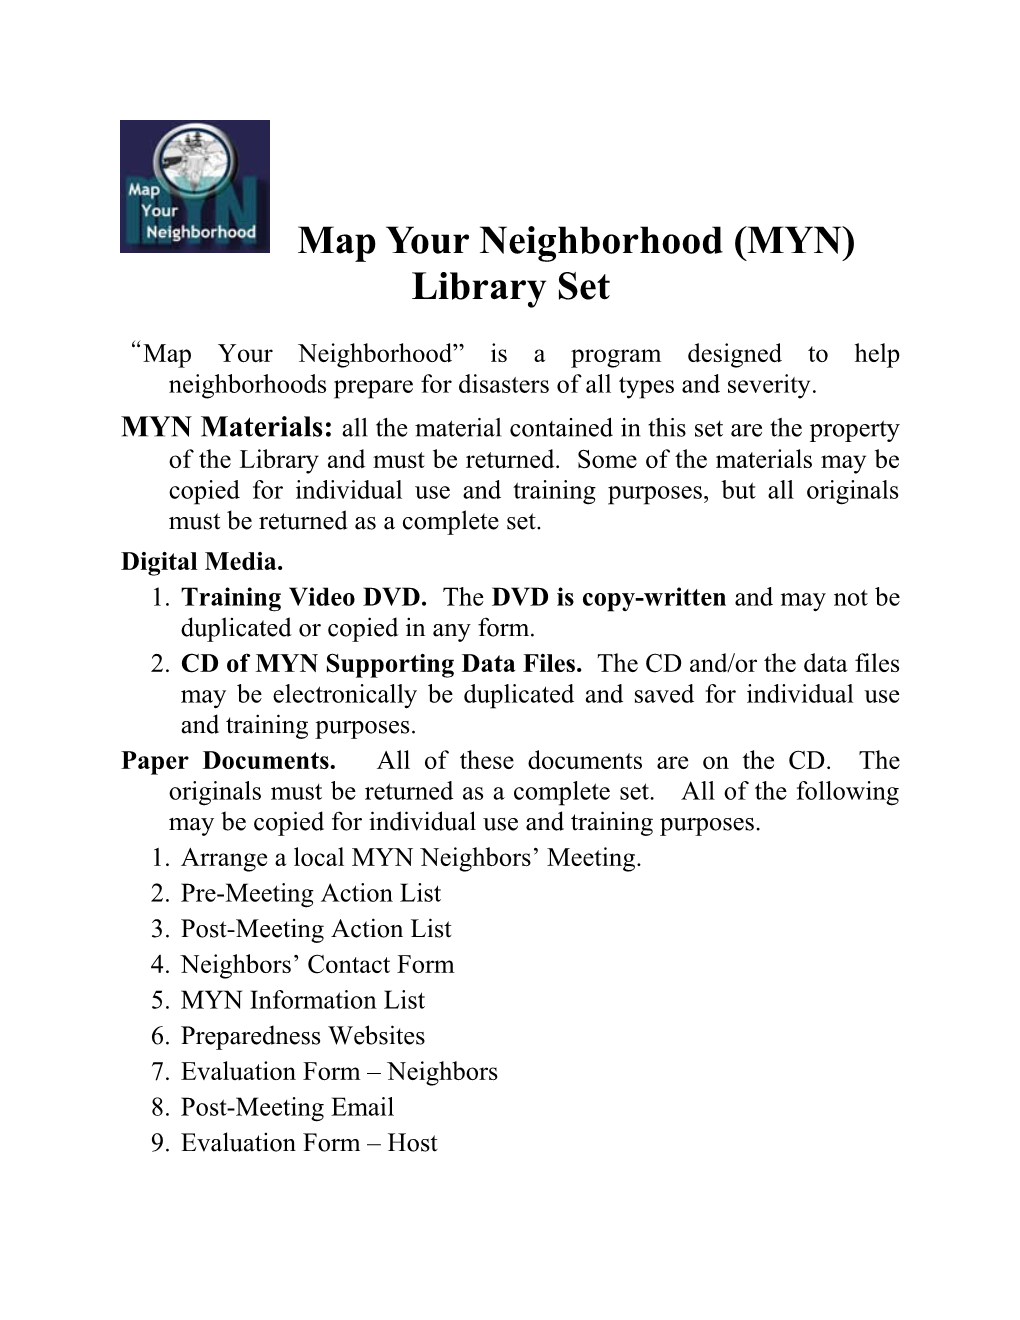 Introduction to Map Your Neighborhood (MYN)